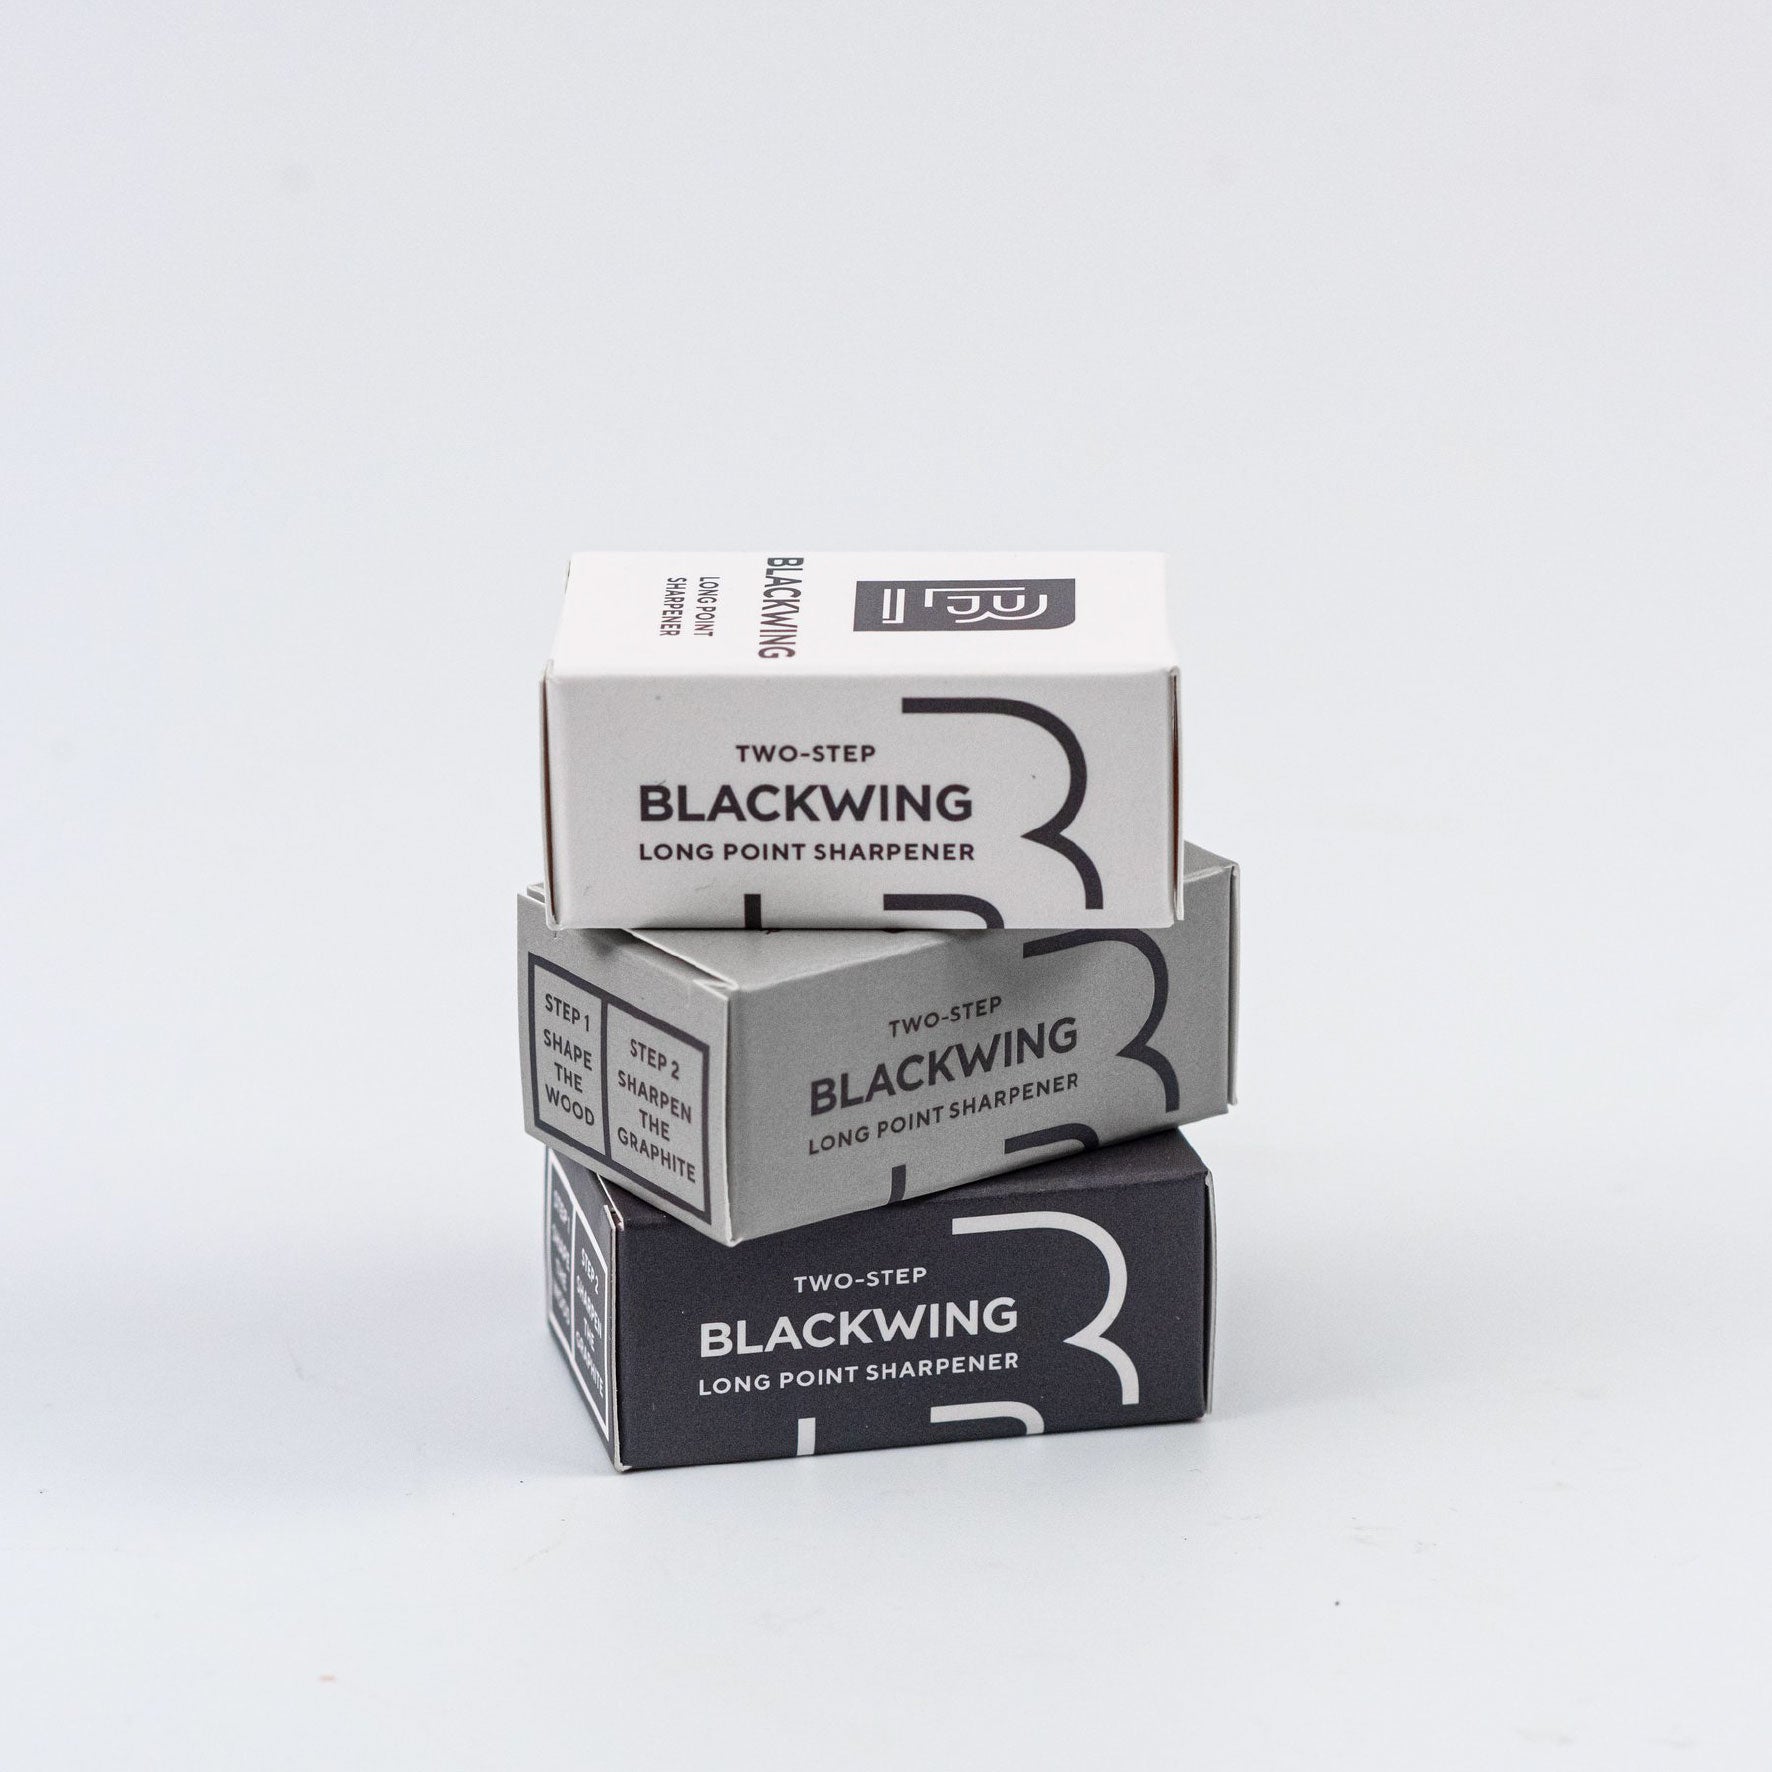 Palomino Blackwing - Sharpener - Long Point Two-Step - Black